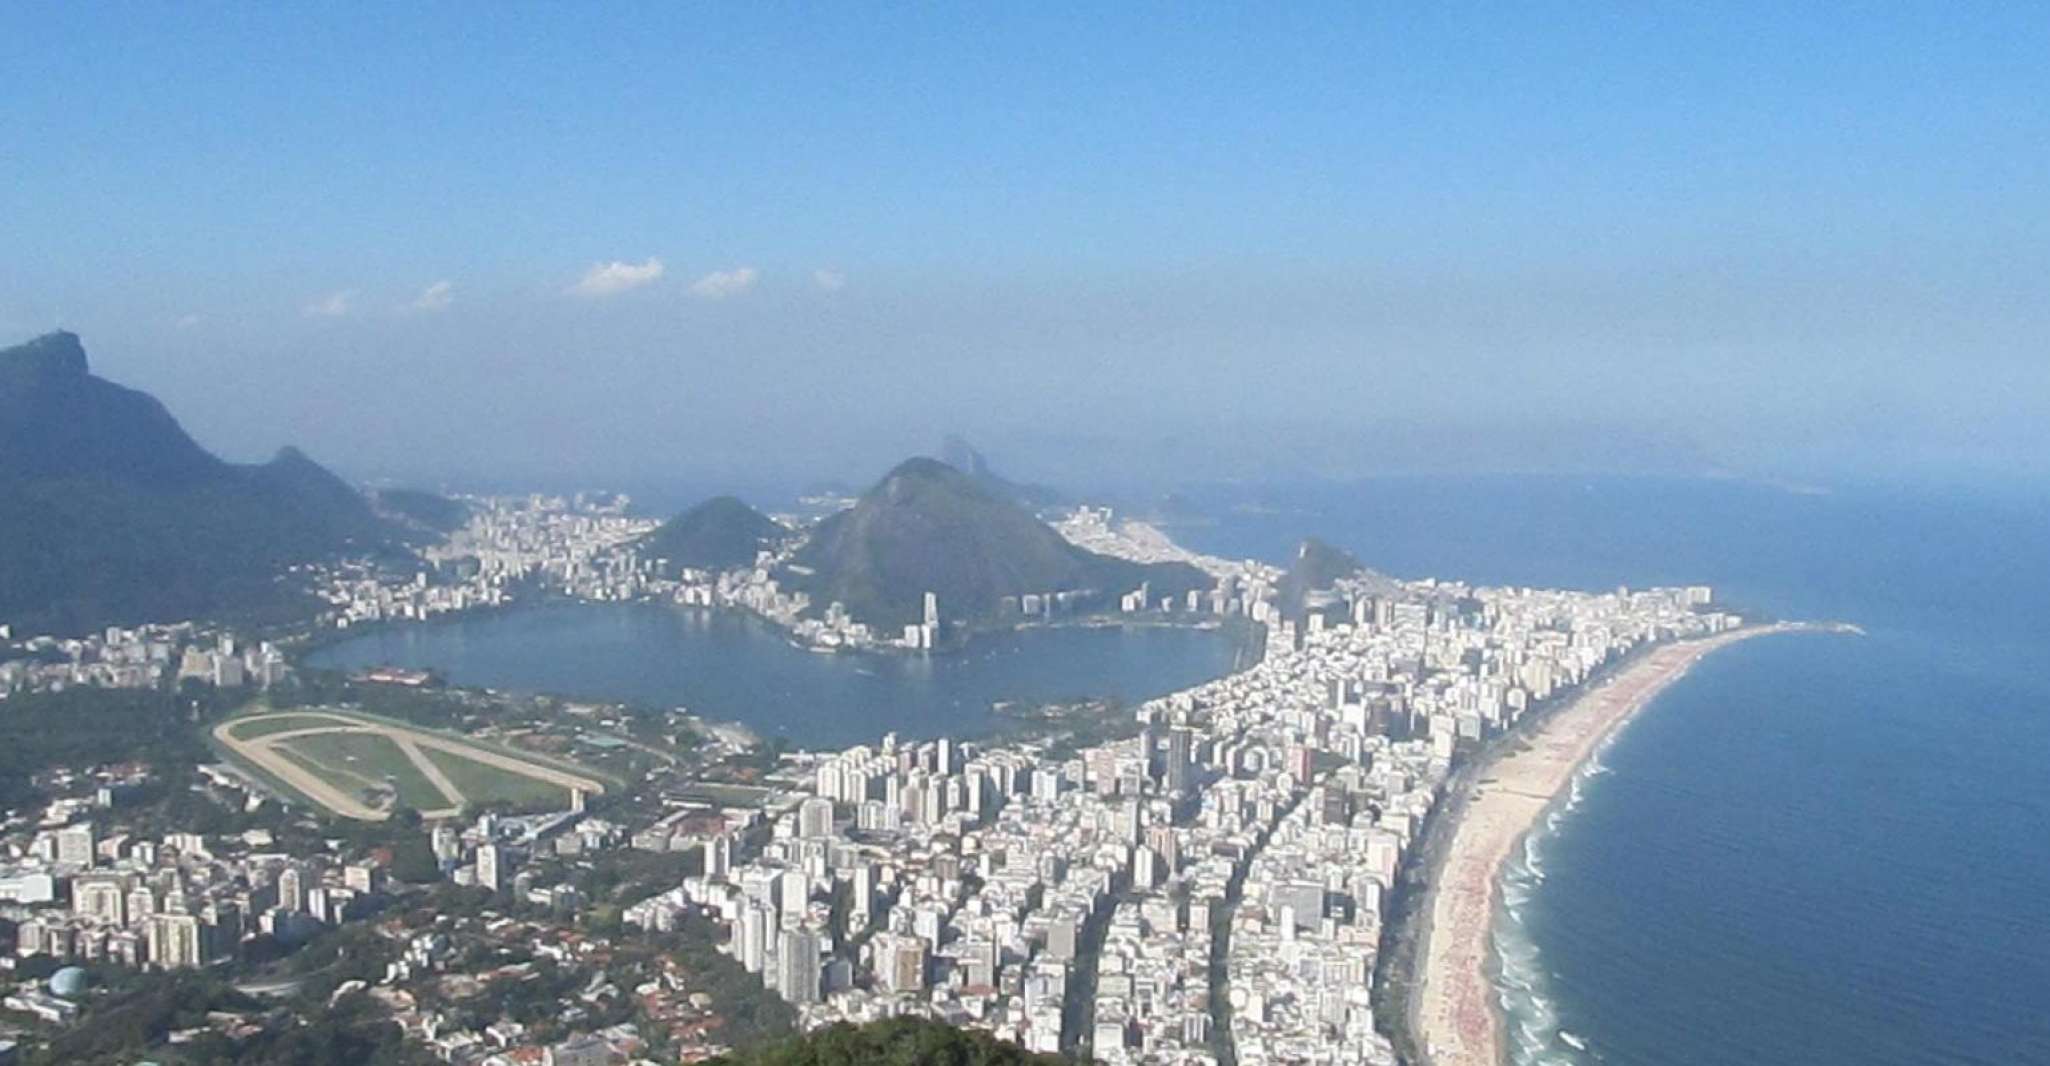 Rio de Janeiro, Vidigal Favela Tour and Two Brothers Hike - Housity